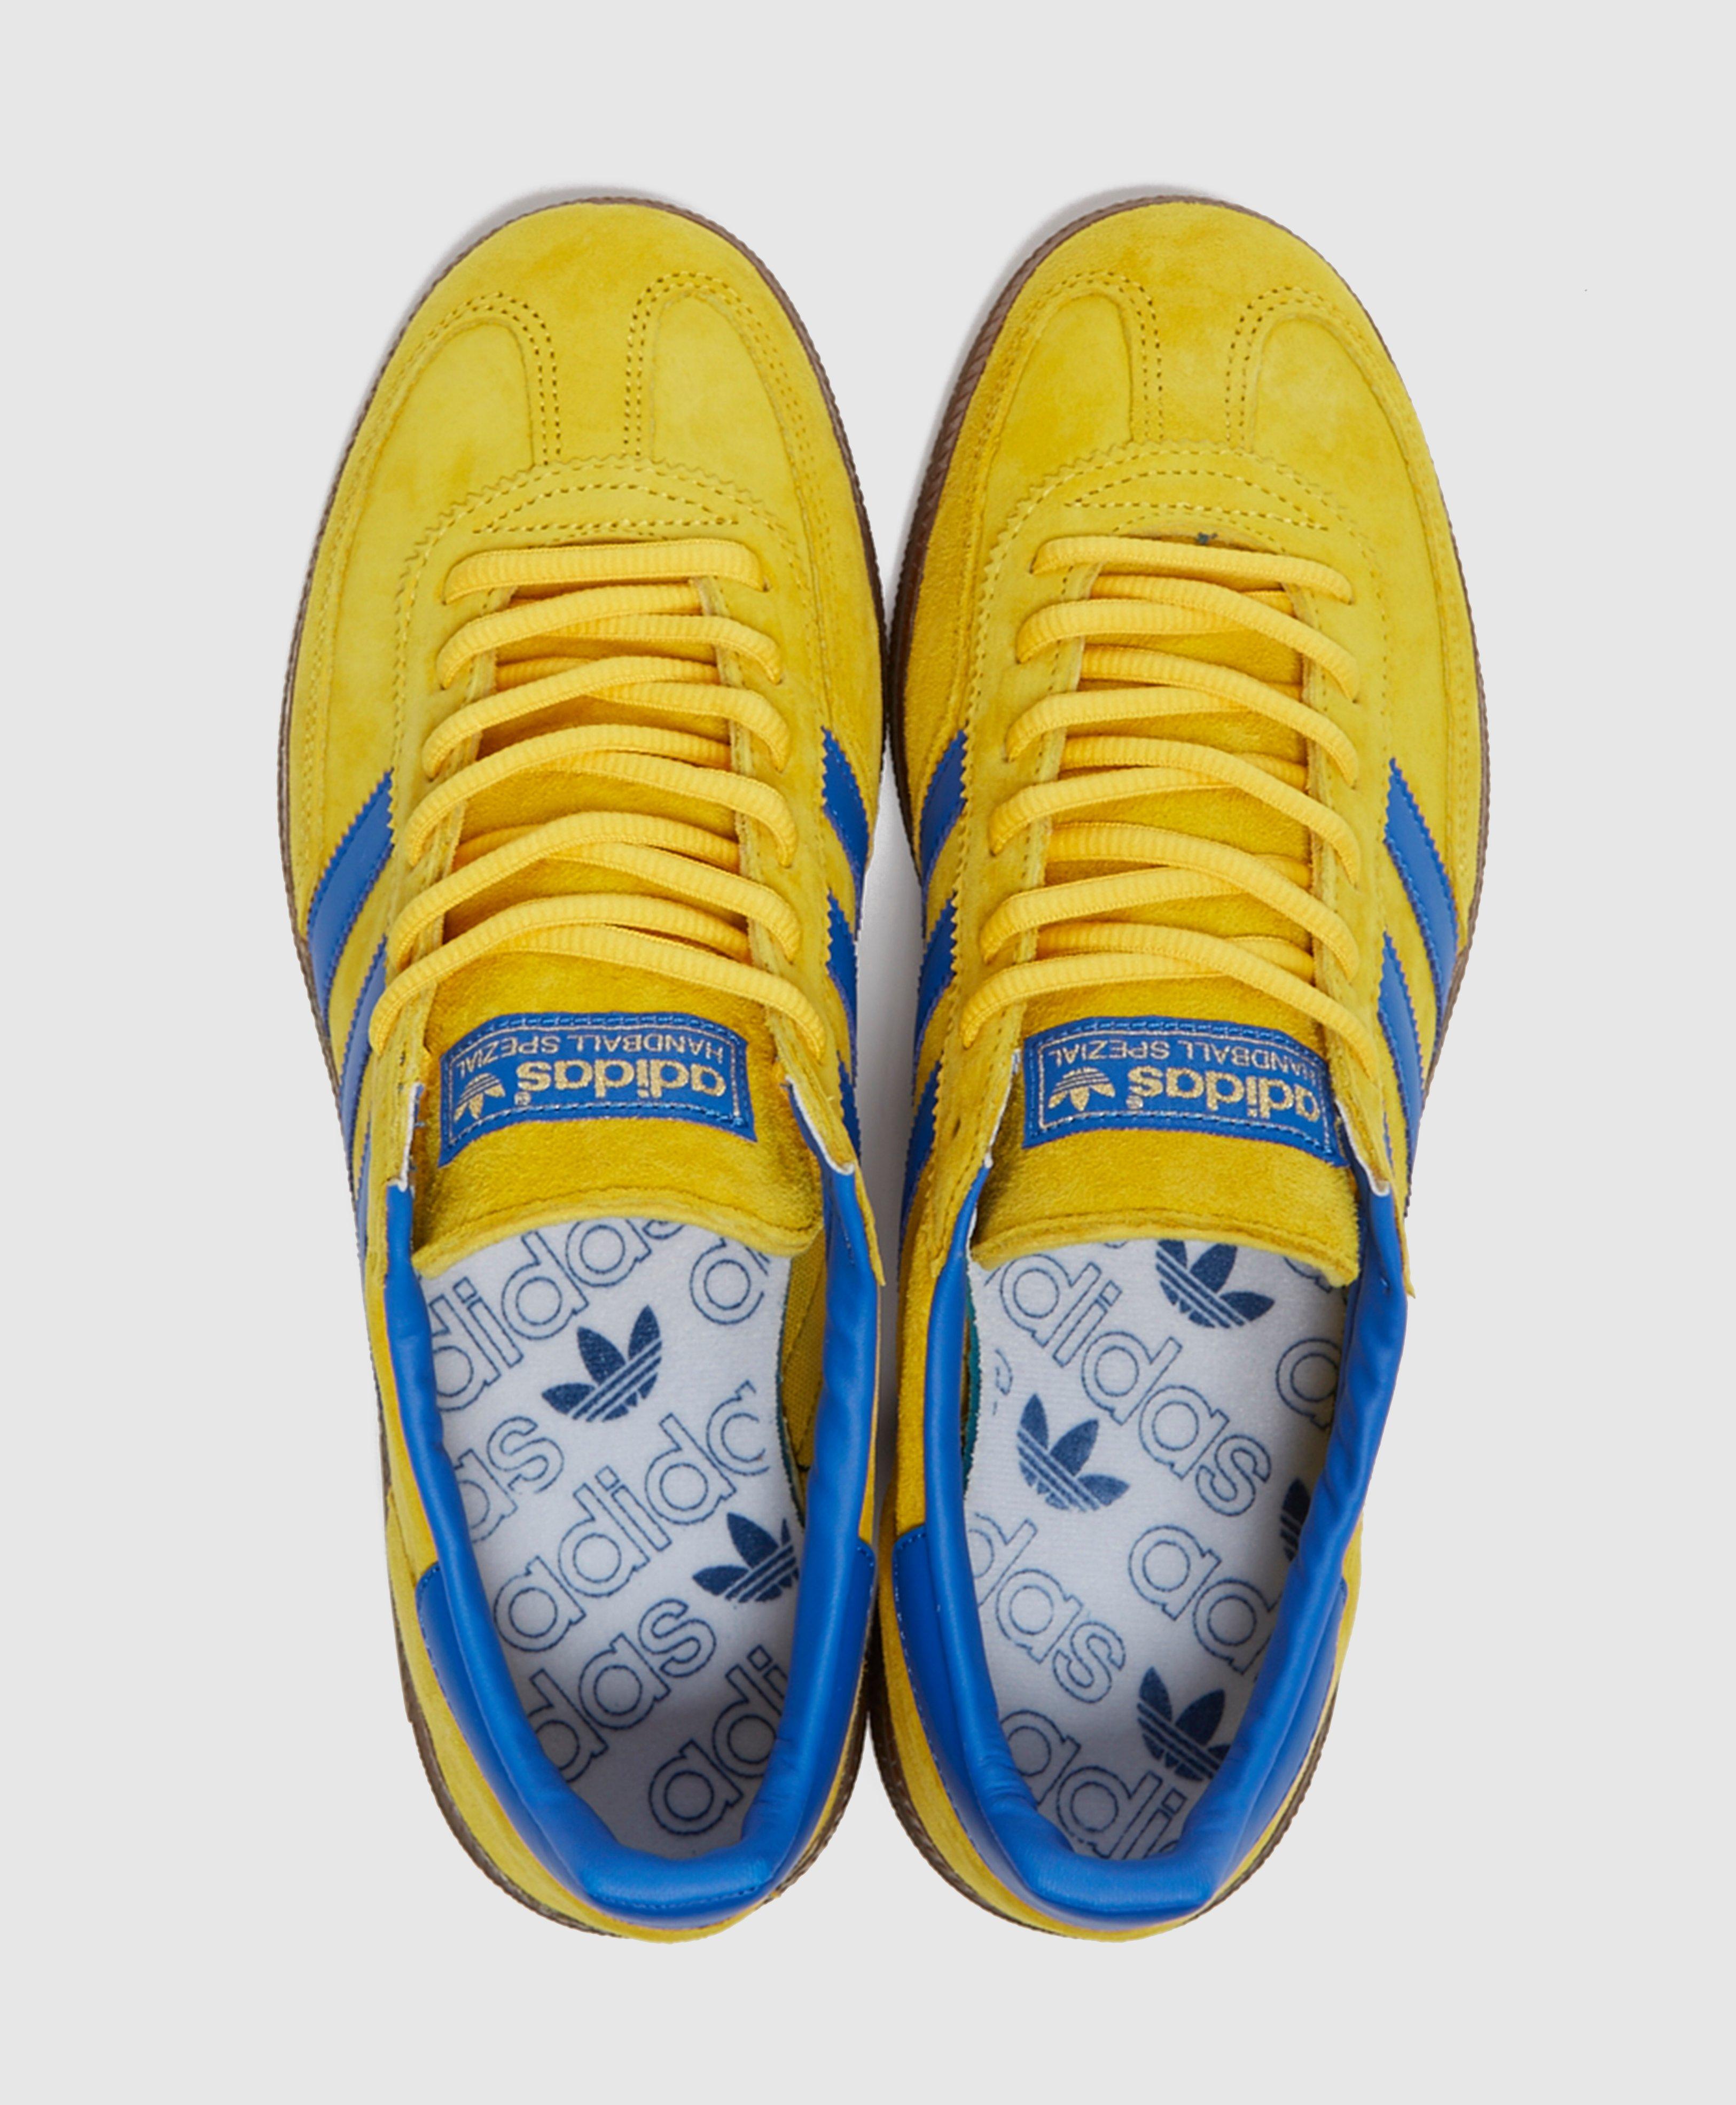 adidas handball spezial blue and yellow